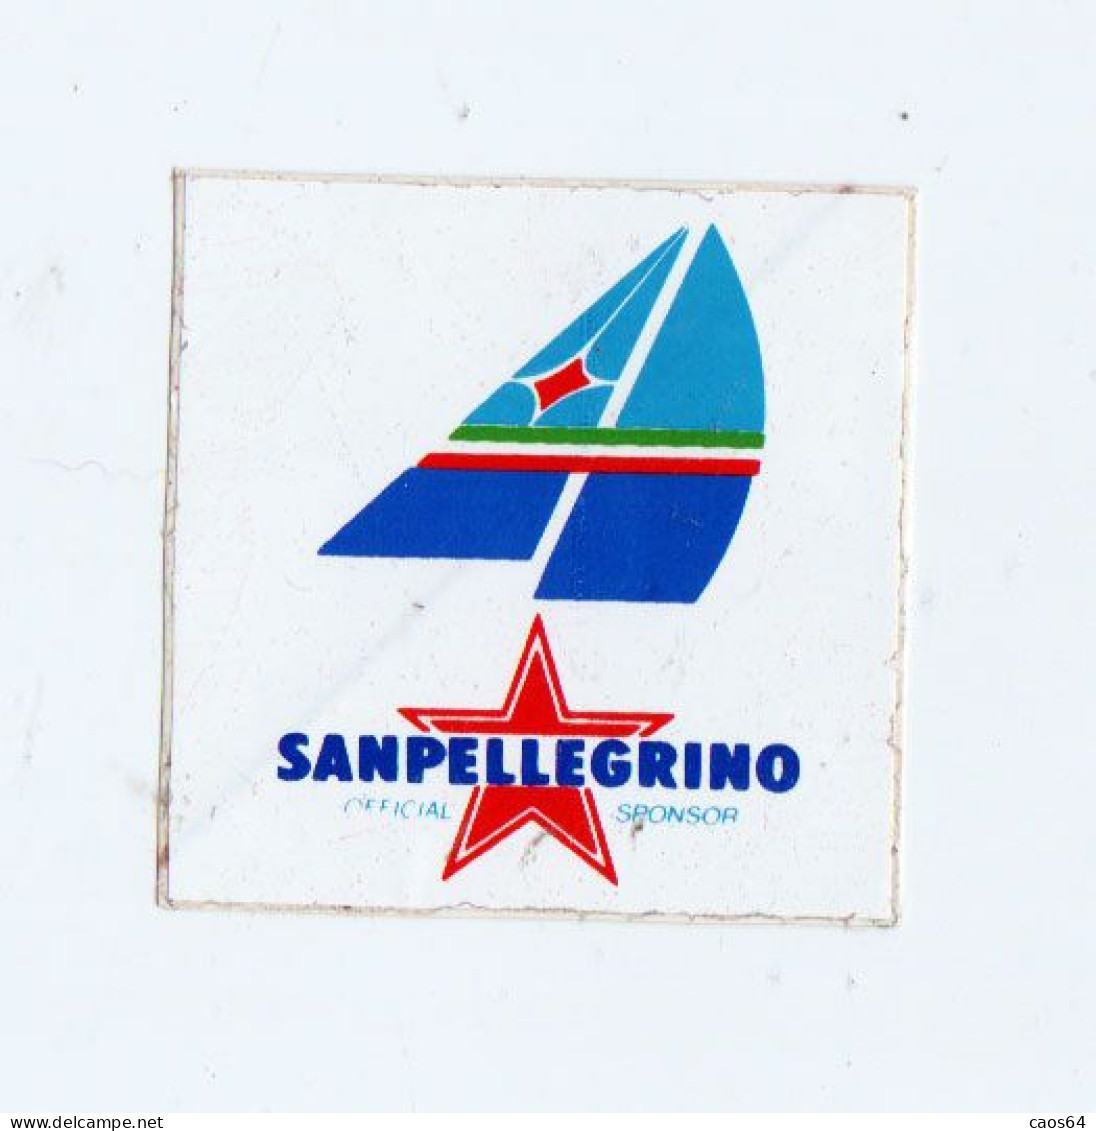 San Pellegrino Sponsor Vela  Cm 6 X 6  ADESIVO STICKER  NEW ORIGINAL - Autocollants